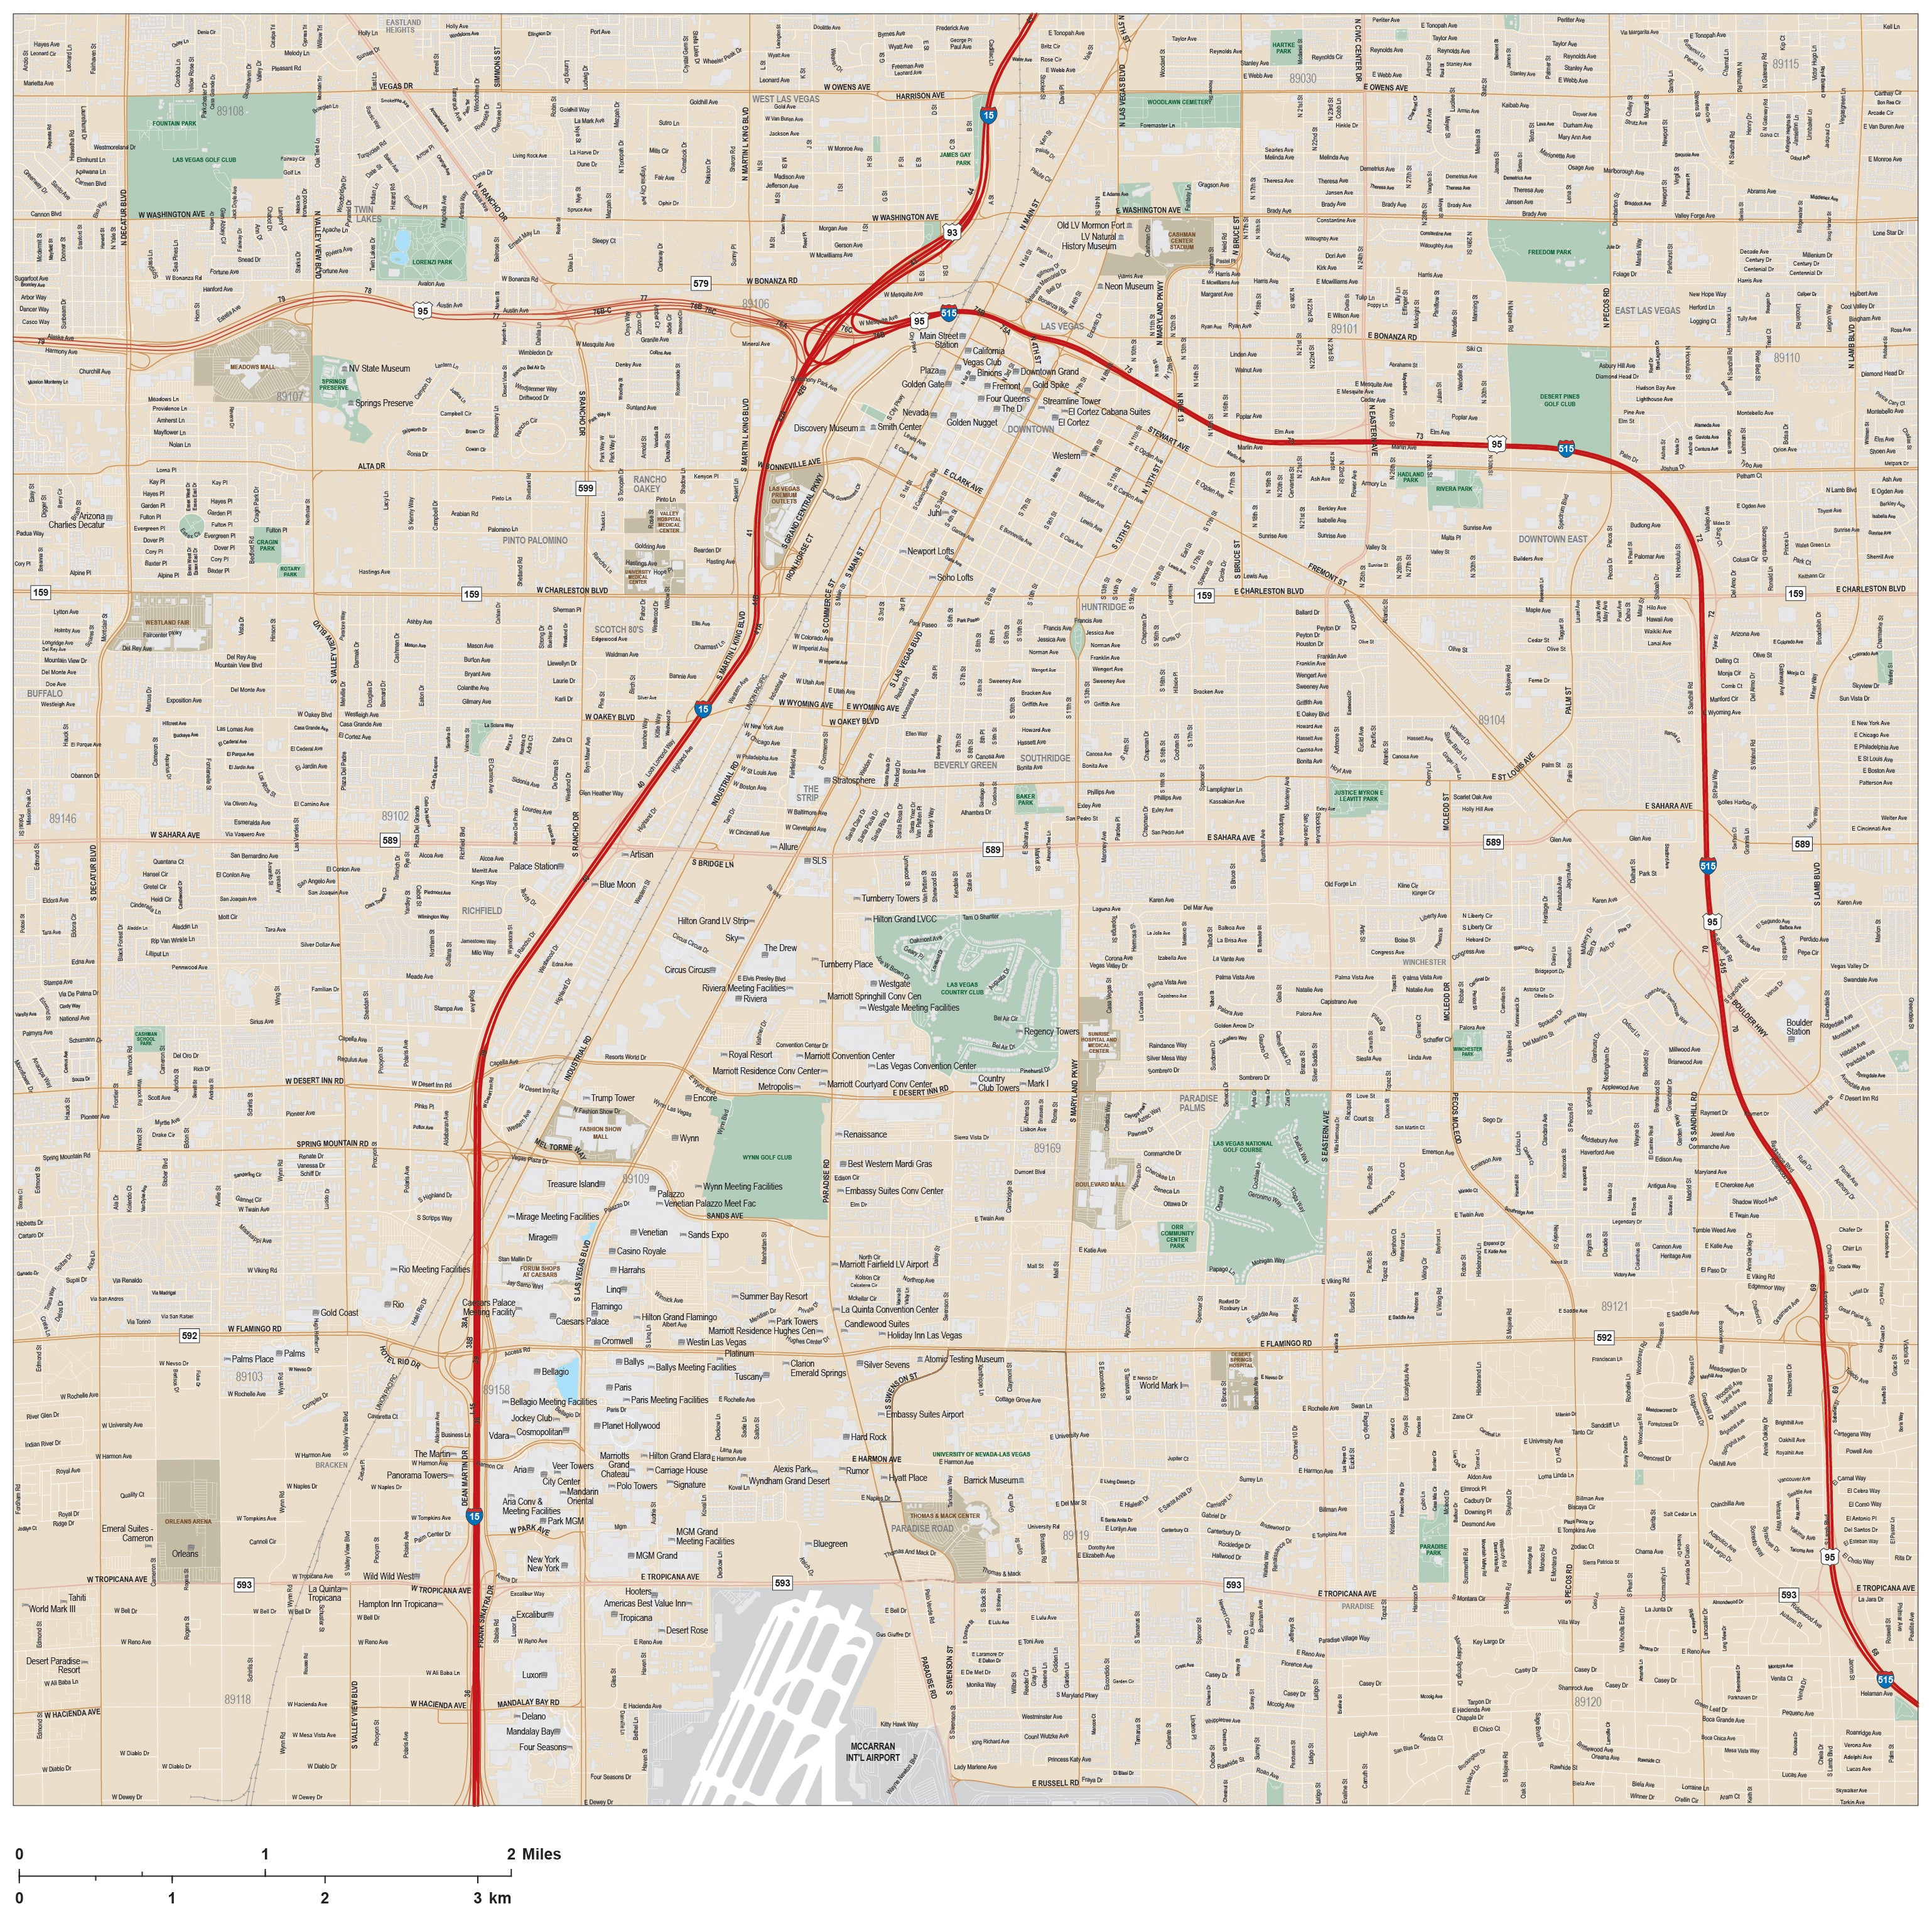 Street Map Of Las Vegas Nv Las Vegas NV Local Street map in Adobe Illustrator Vector Format